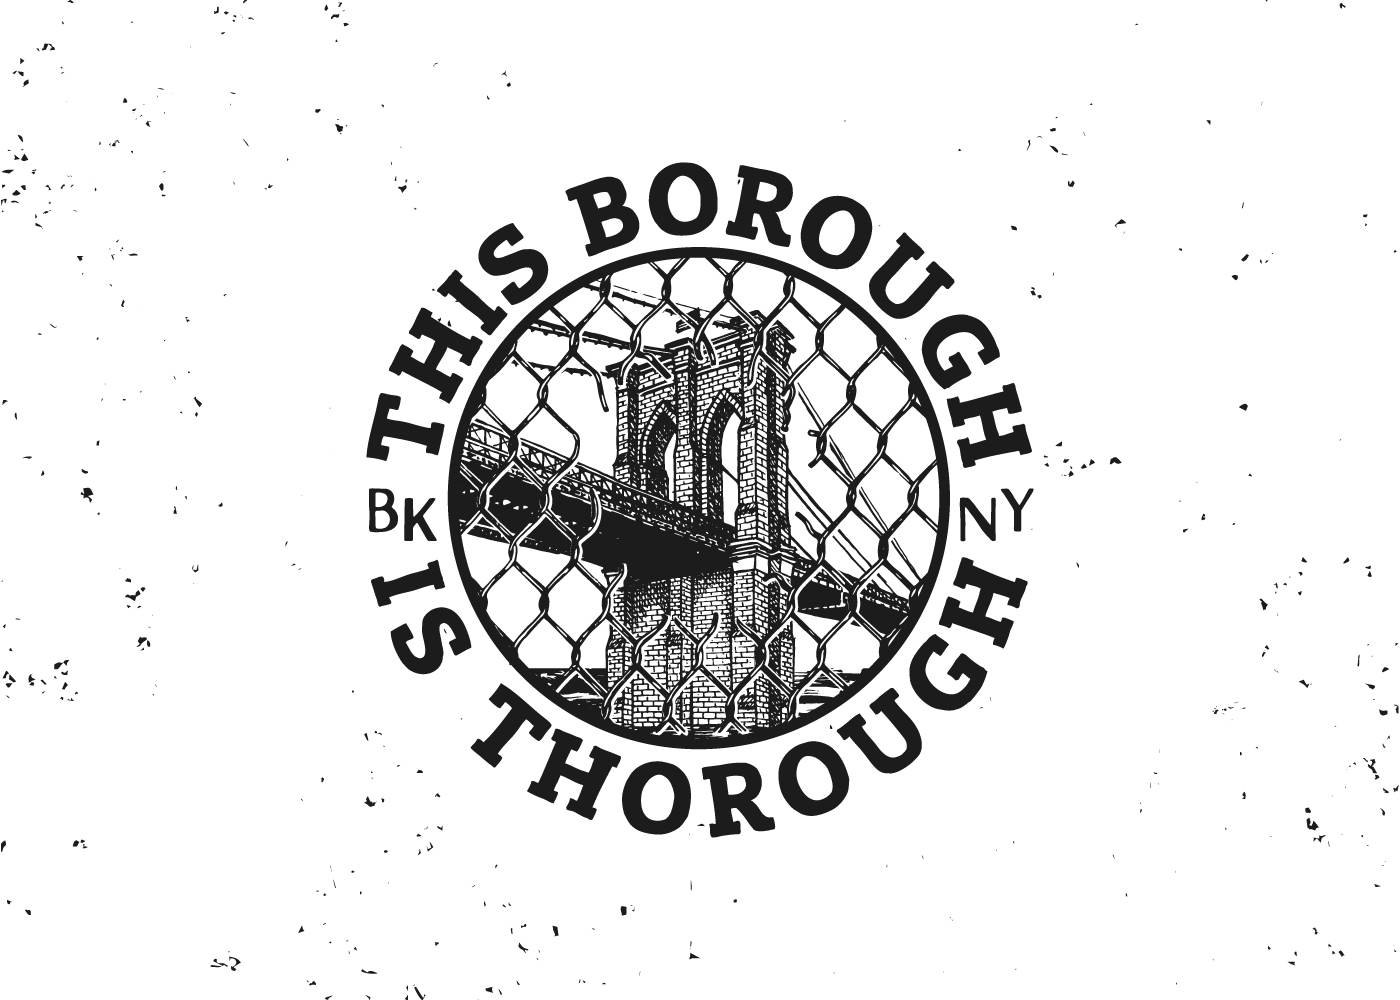 Brooklyn New York Brownstones borough bridge